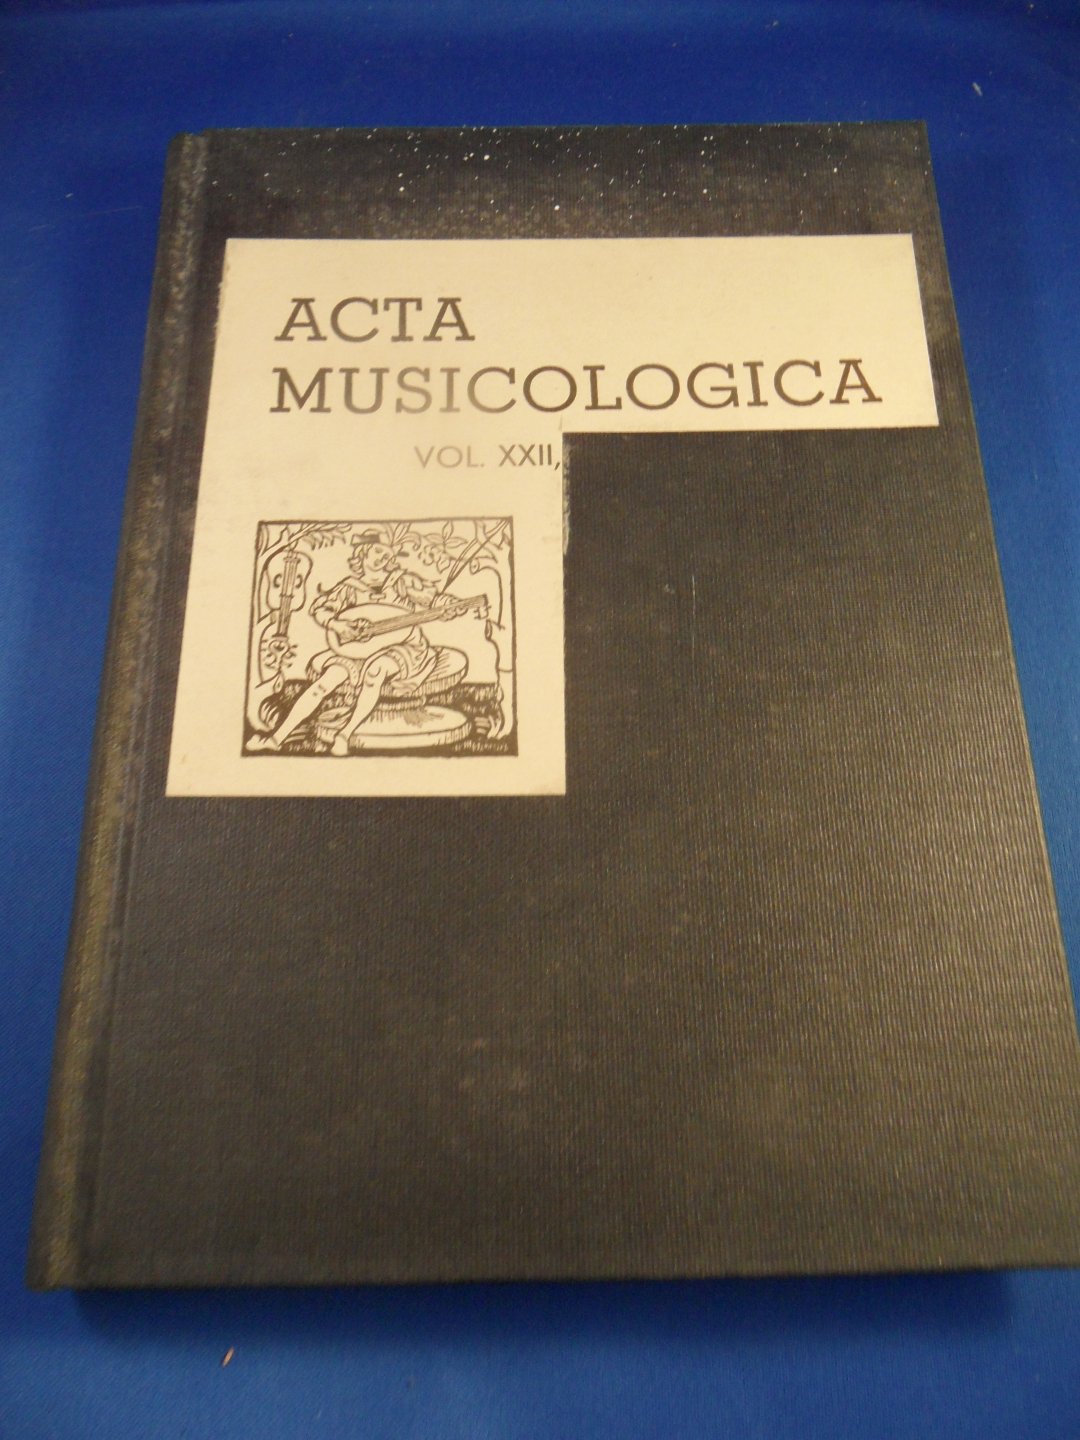  - acta musicologica vol. 22, fasc 1-2